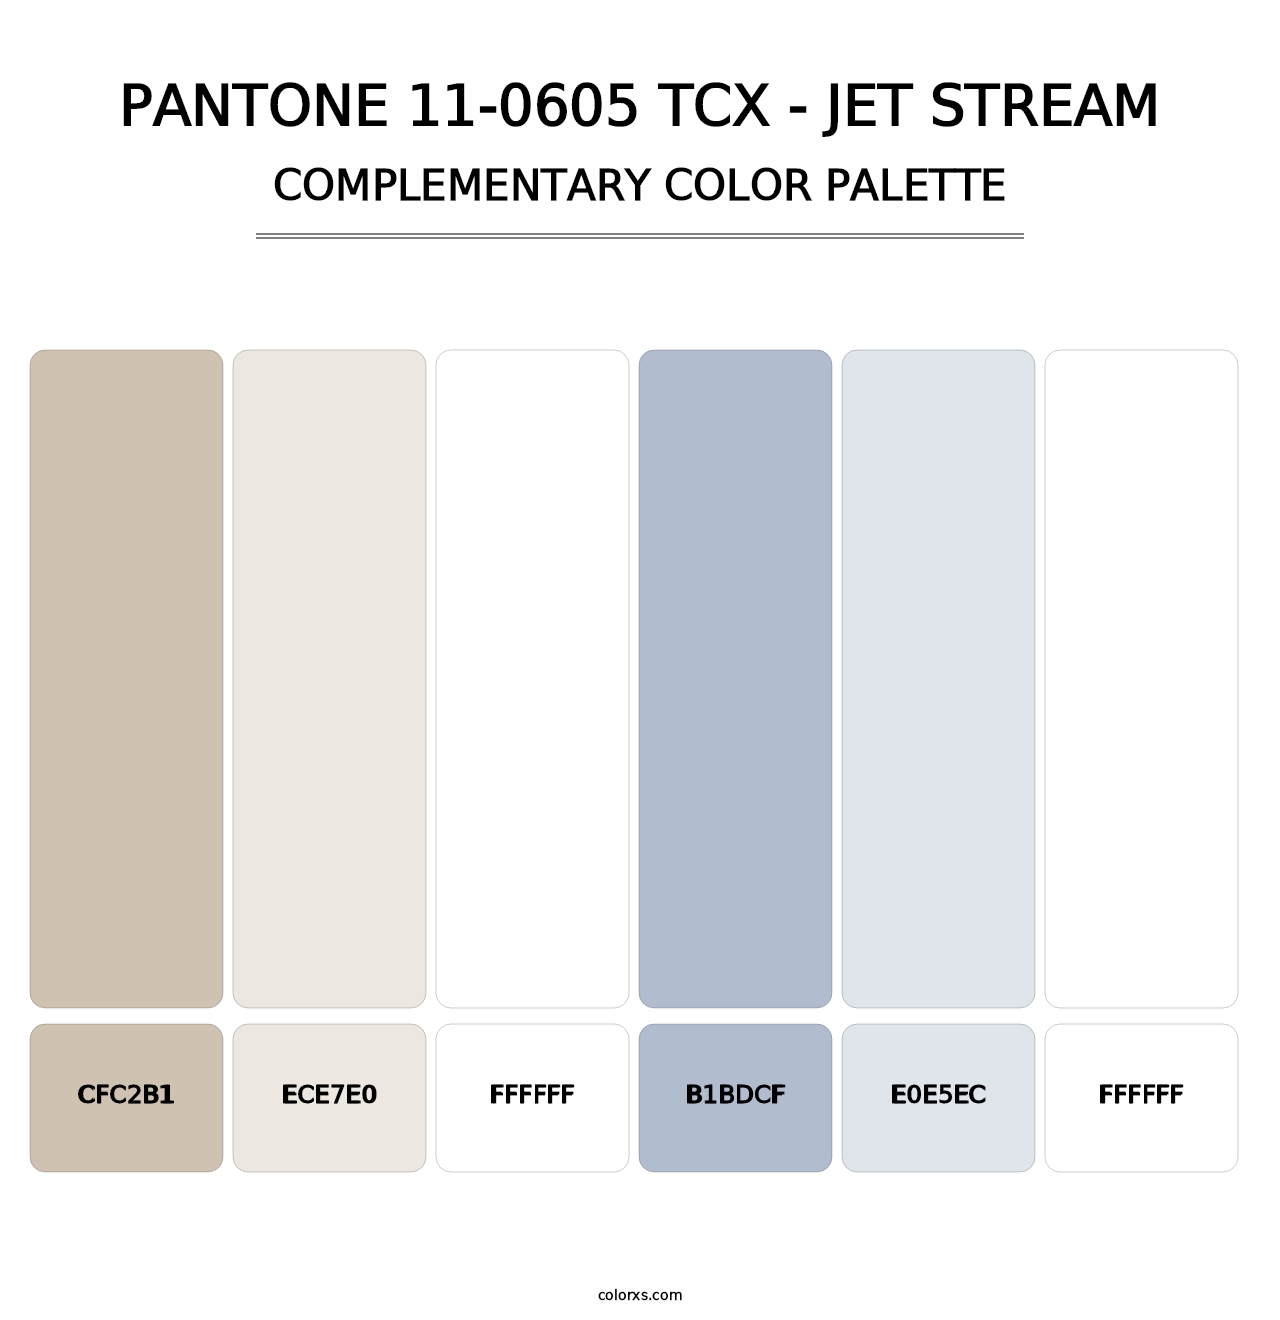 PANTONE 11-0605 TCX - Jet Stream - Complementary Color Palette